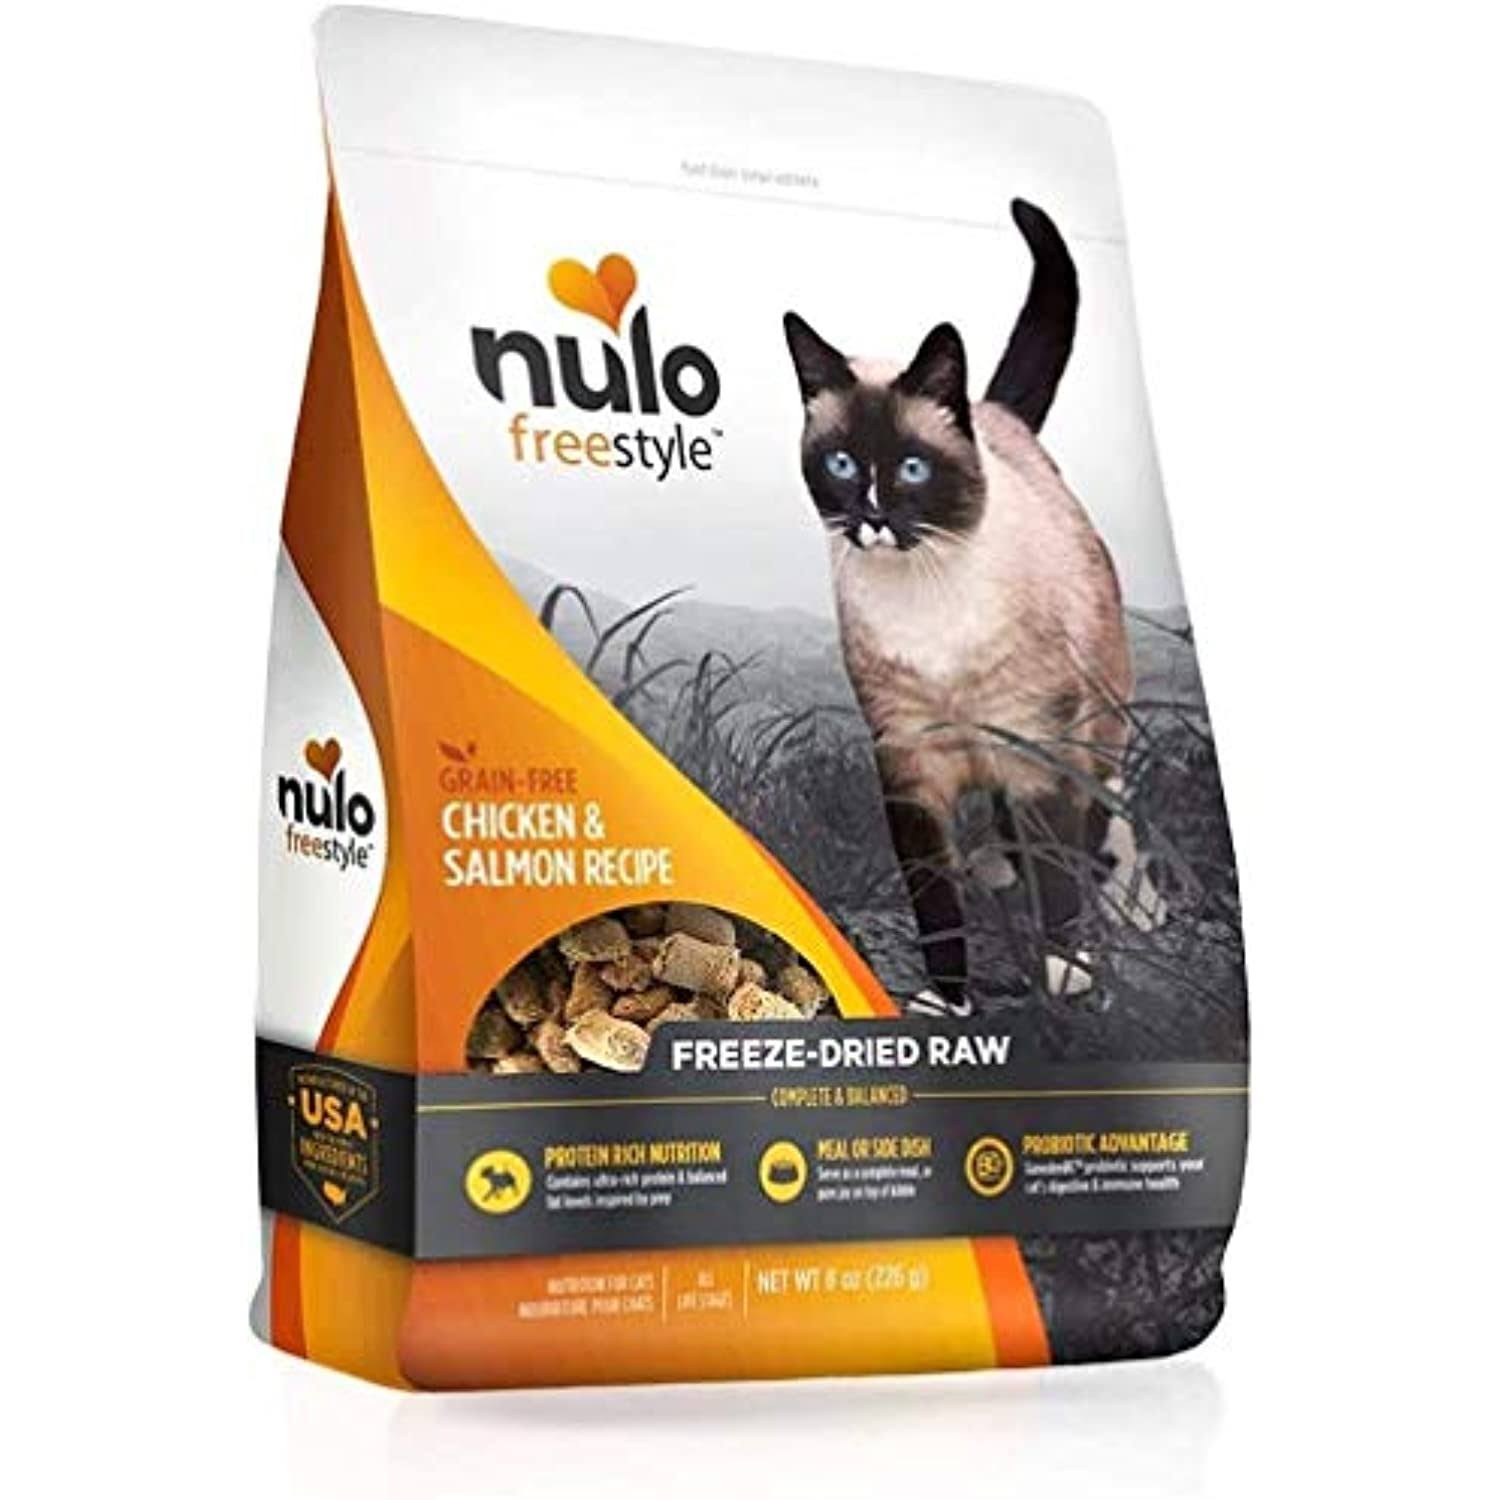 Nulo Freestyle Chicken & Salmon Freeze-Dried Raw Cat Food, 8-oz